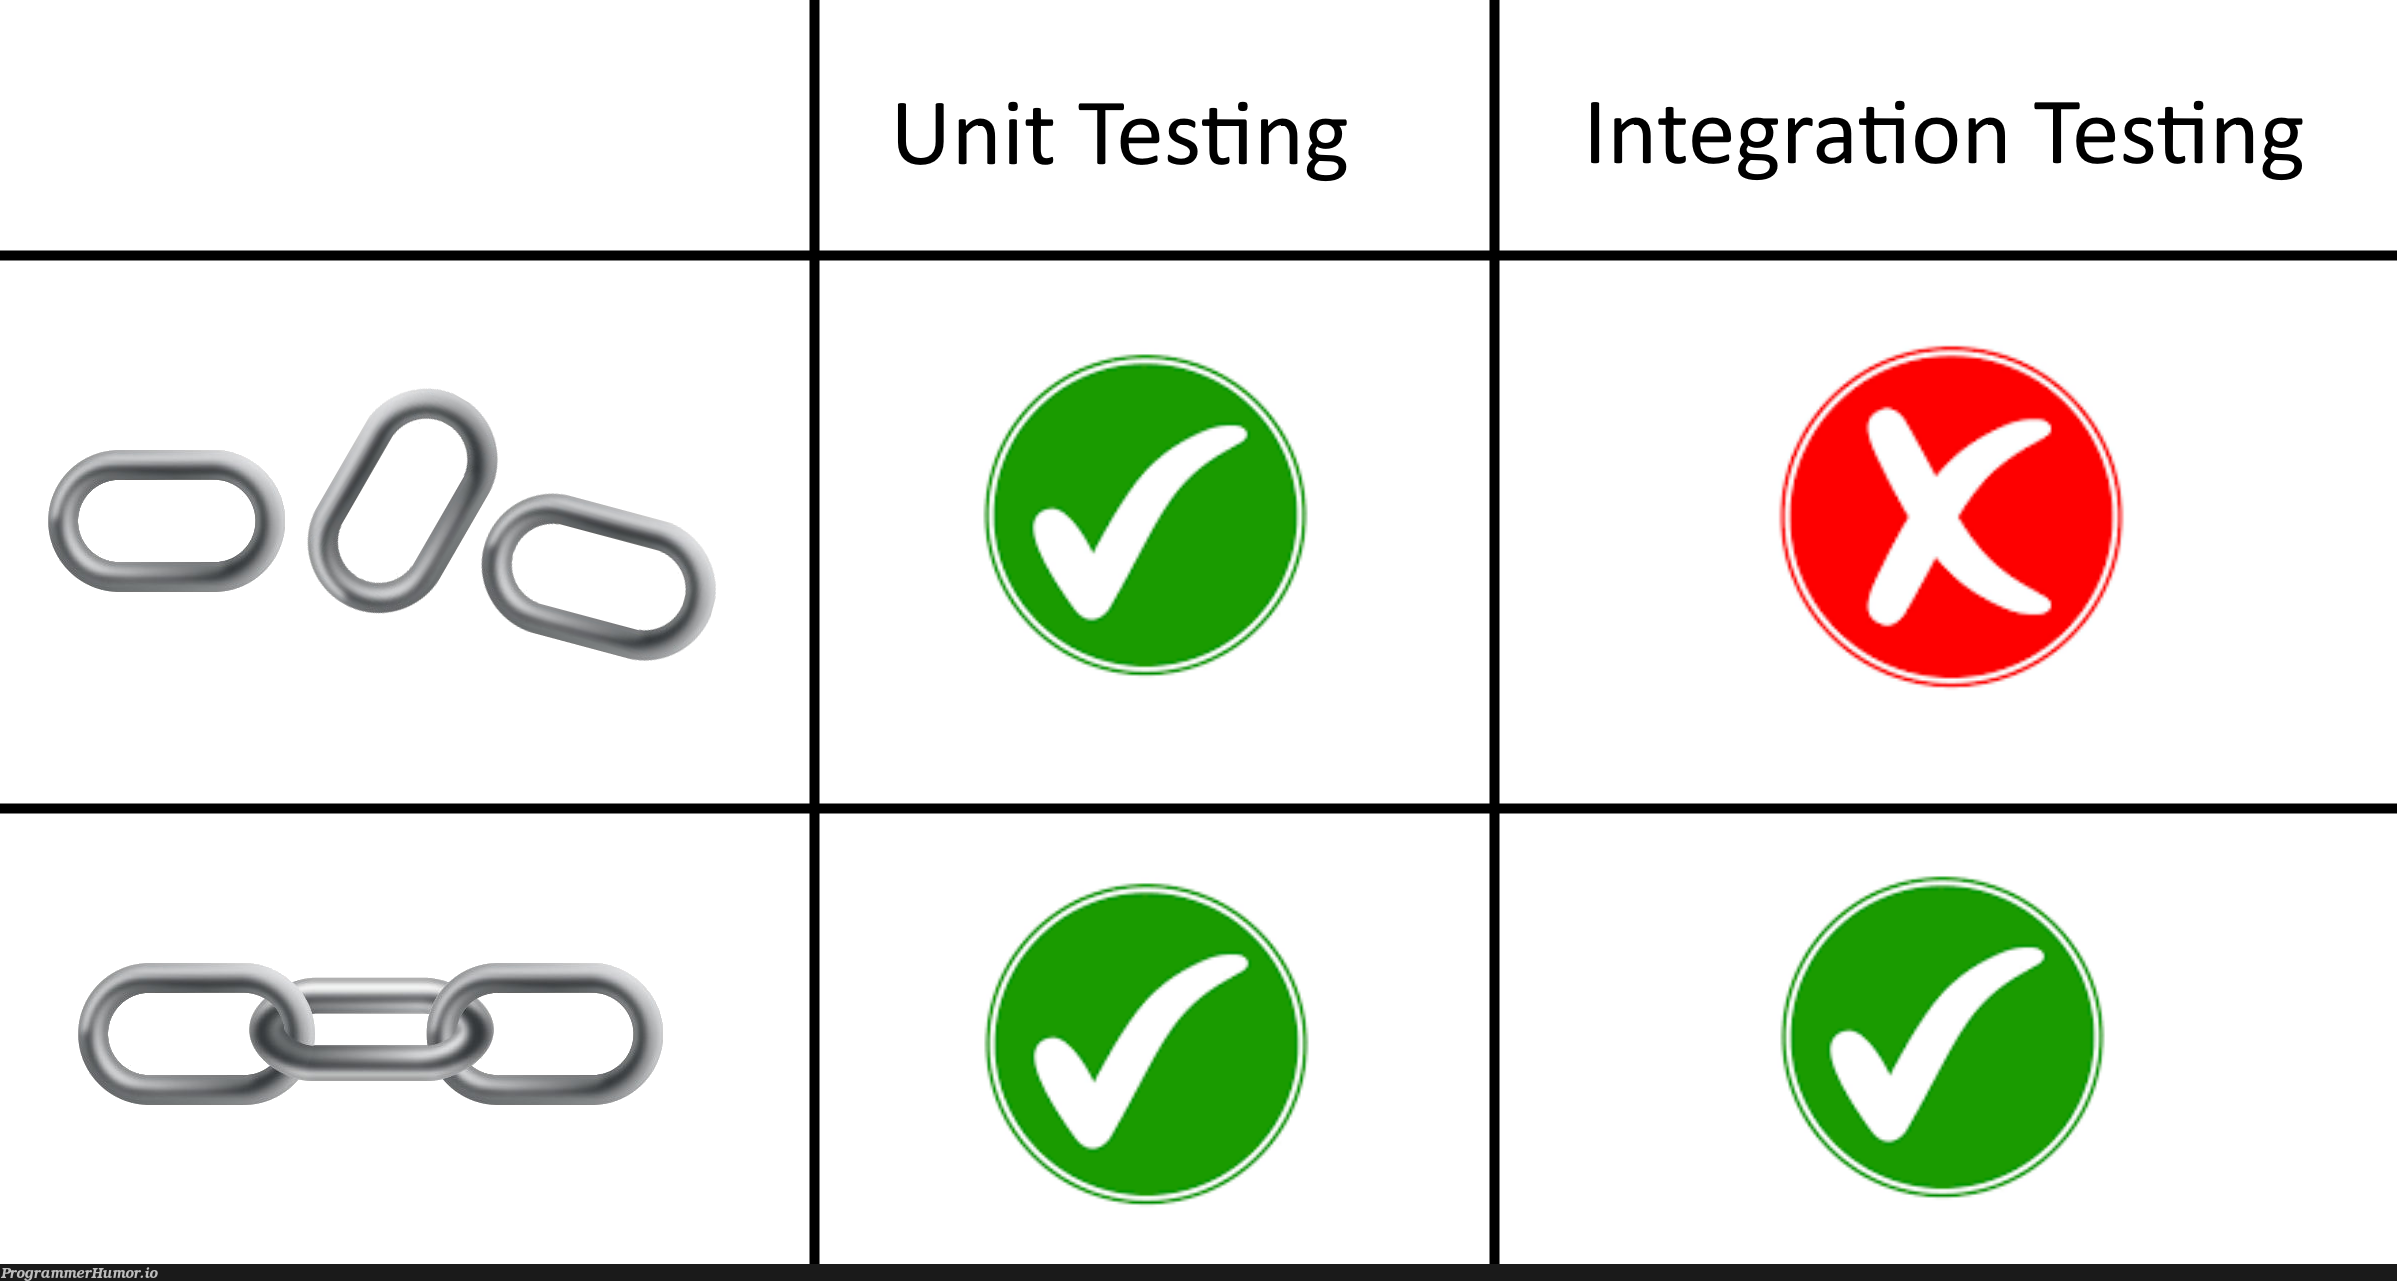 Testing unit tests